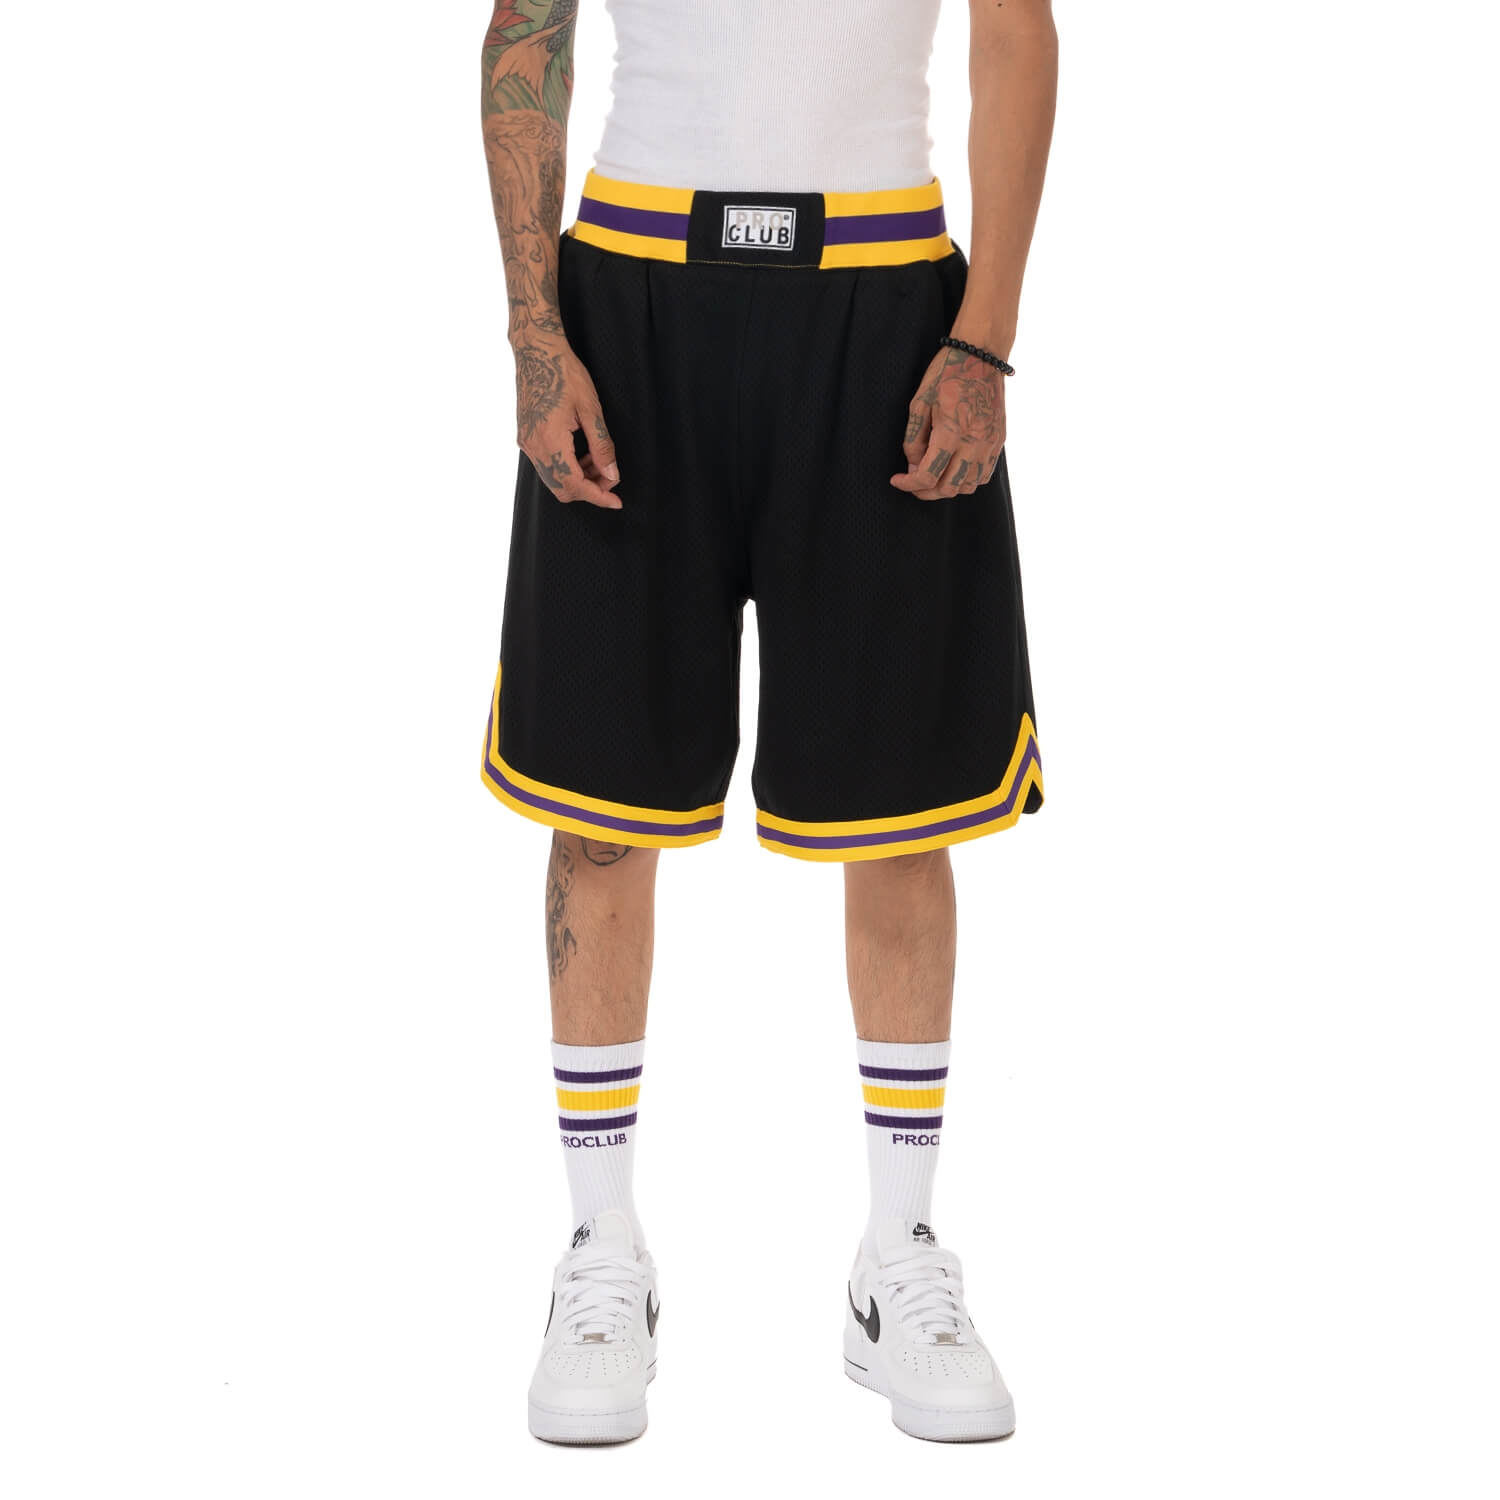 Pro Club Classic Basketball Shorts - Black/Gold